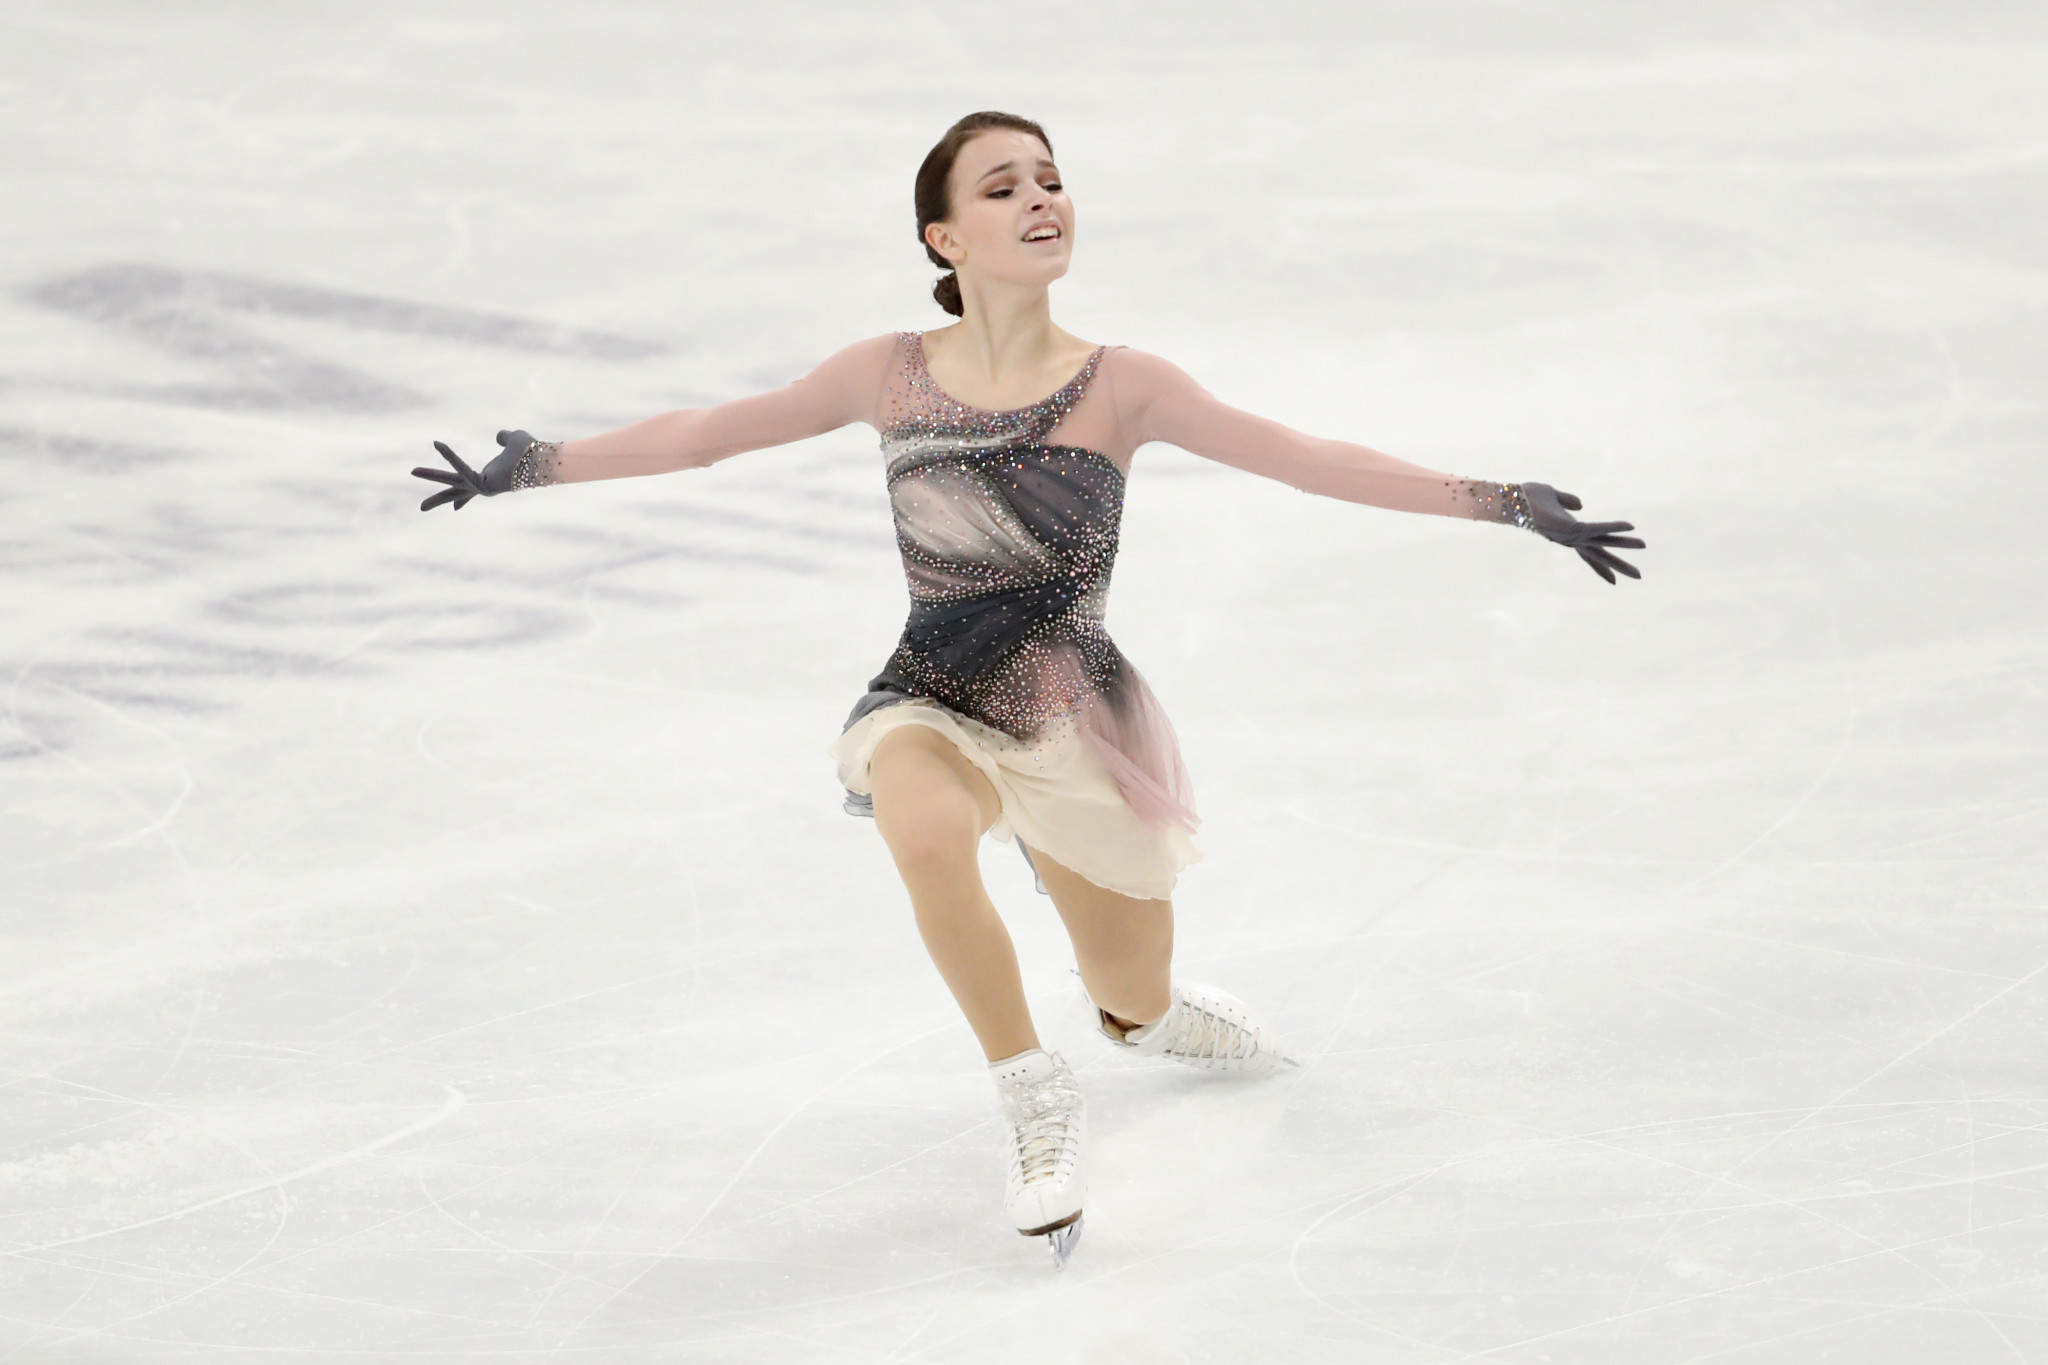 World champion Shcherbakova among competitors at ISU Grand Prix of Figure Skating in Grenoble 